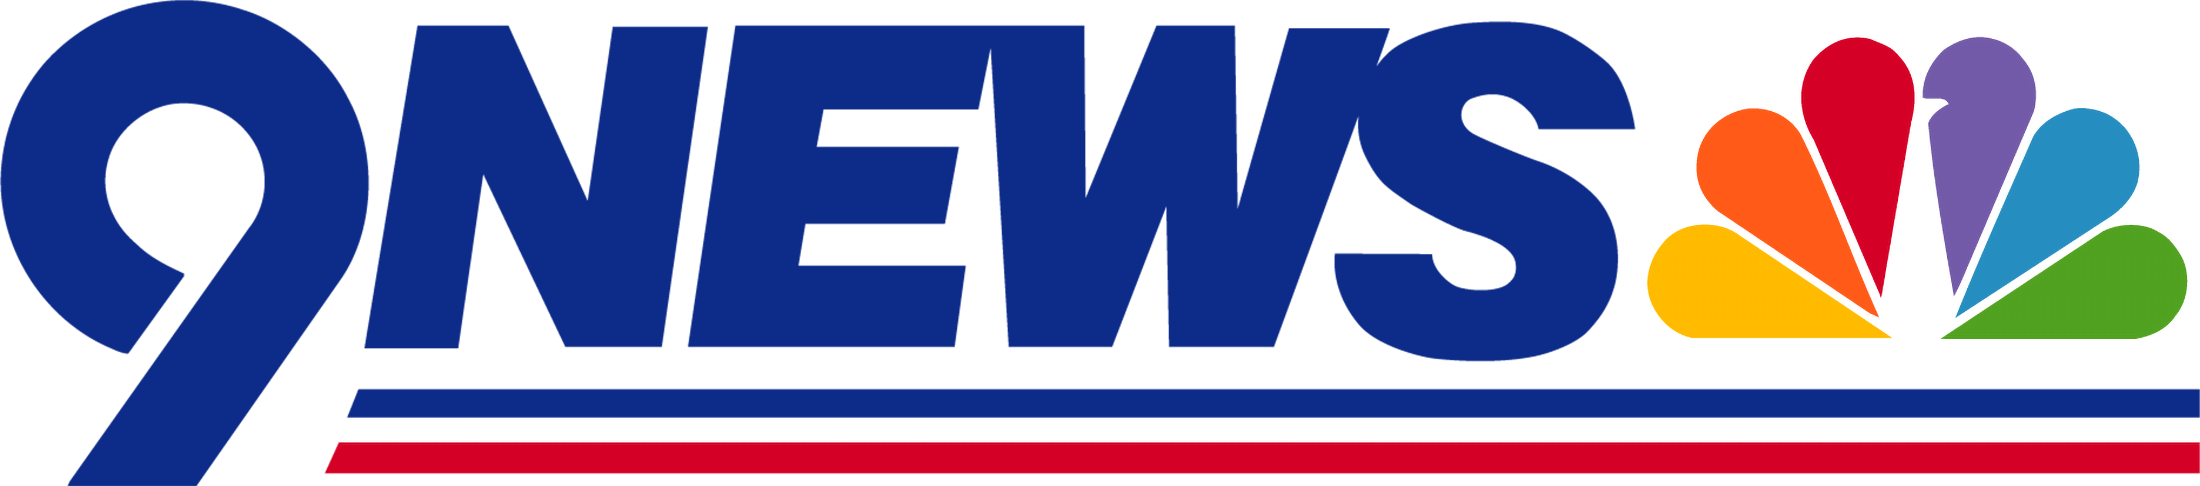 KUSA TV Denver logo